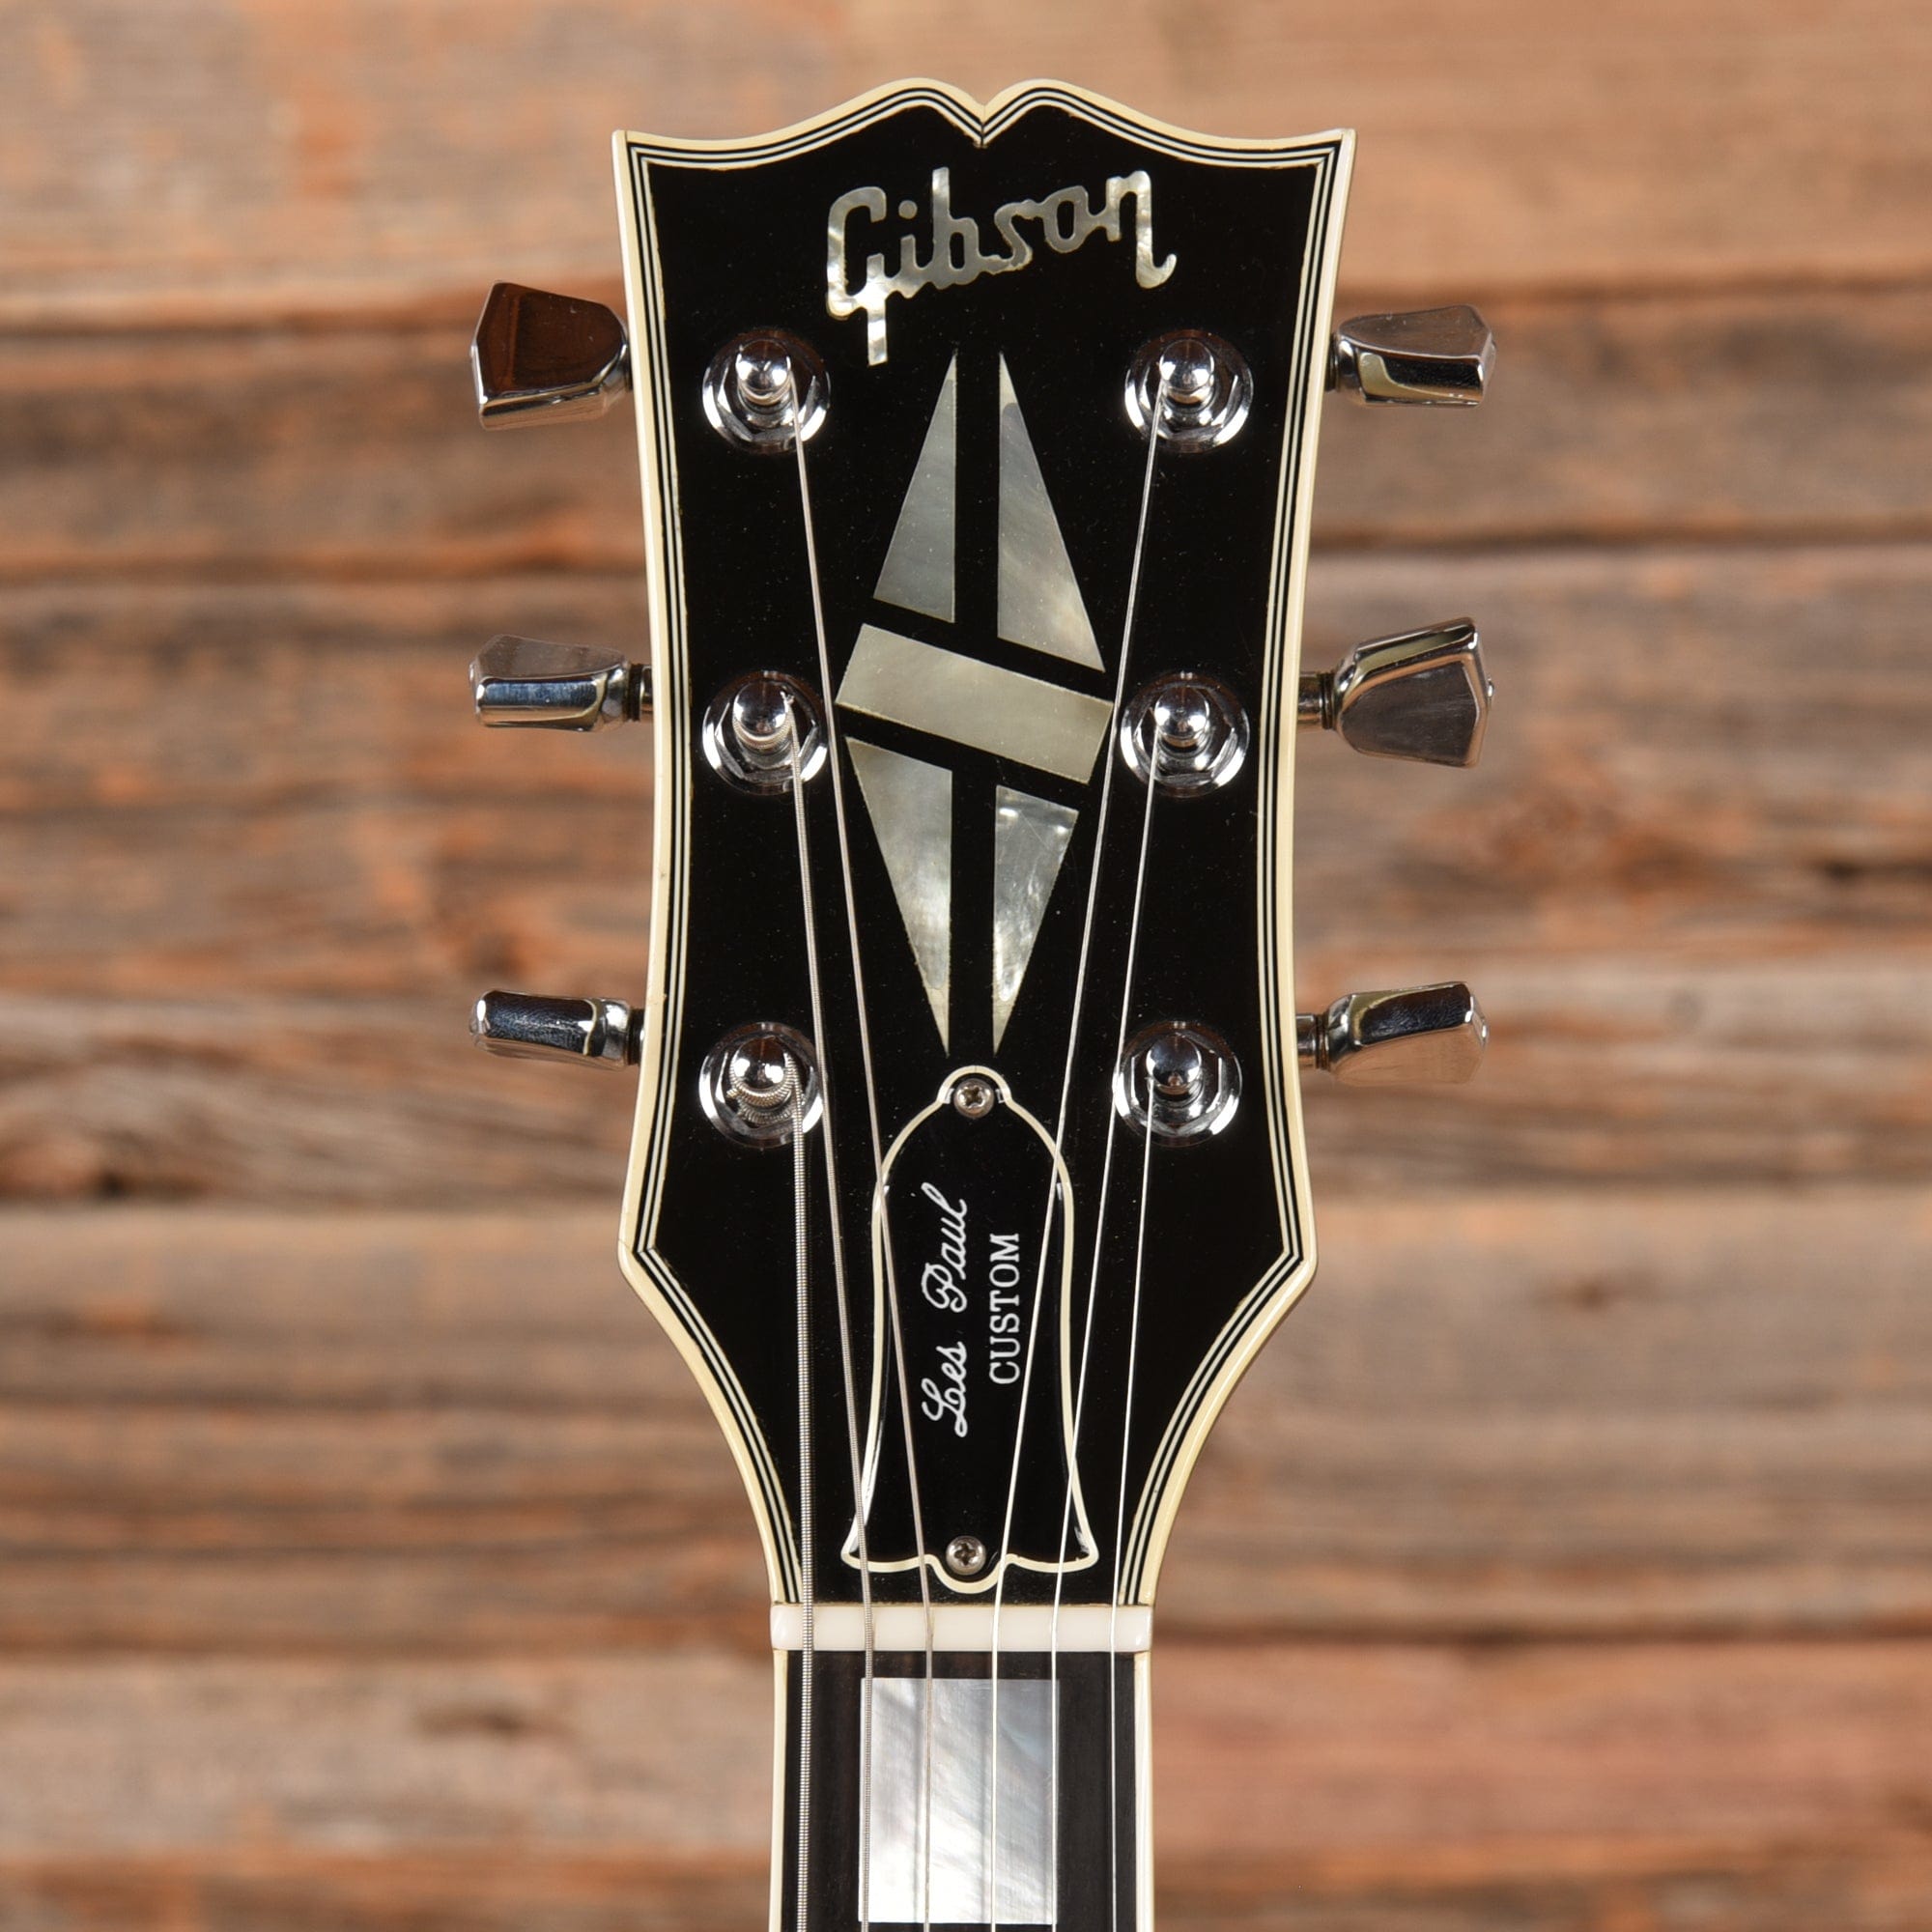 Gibson Les Paul Custom Silverburst 1979 Electric Guitars / Solid Body